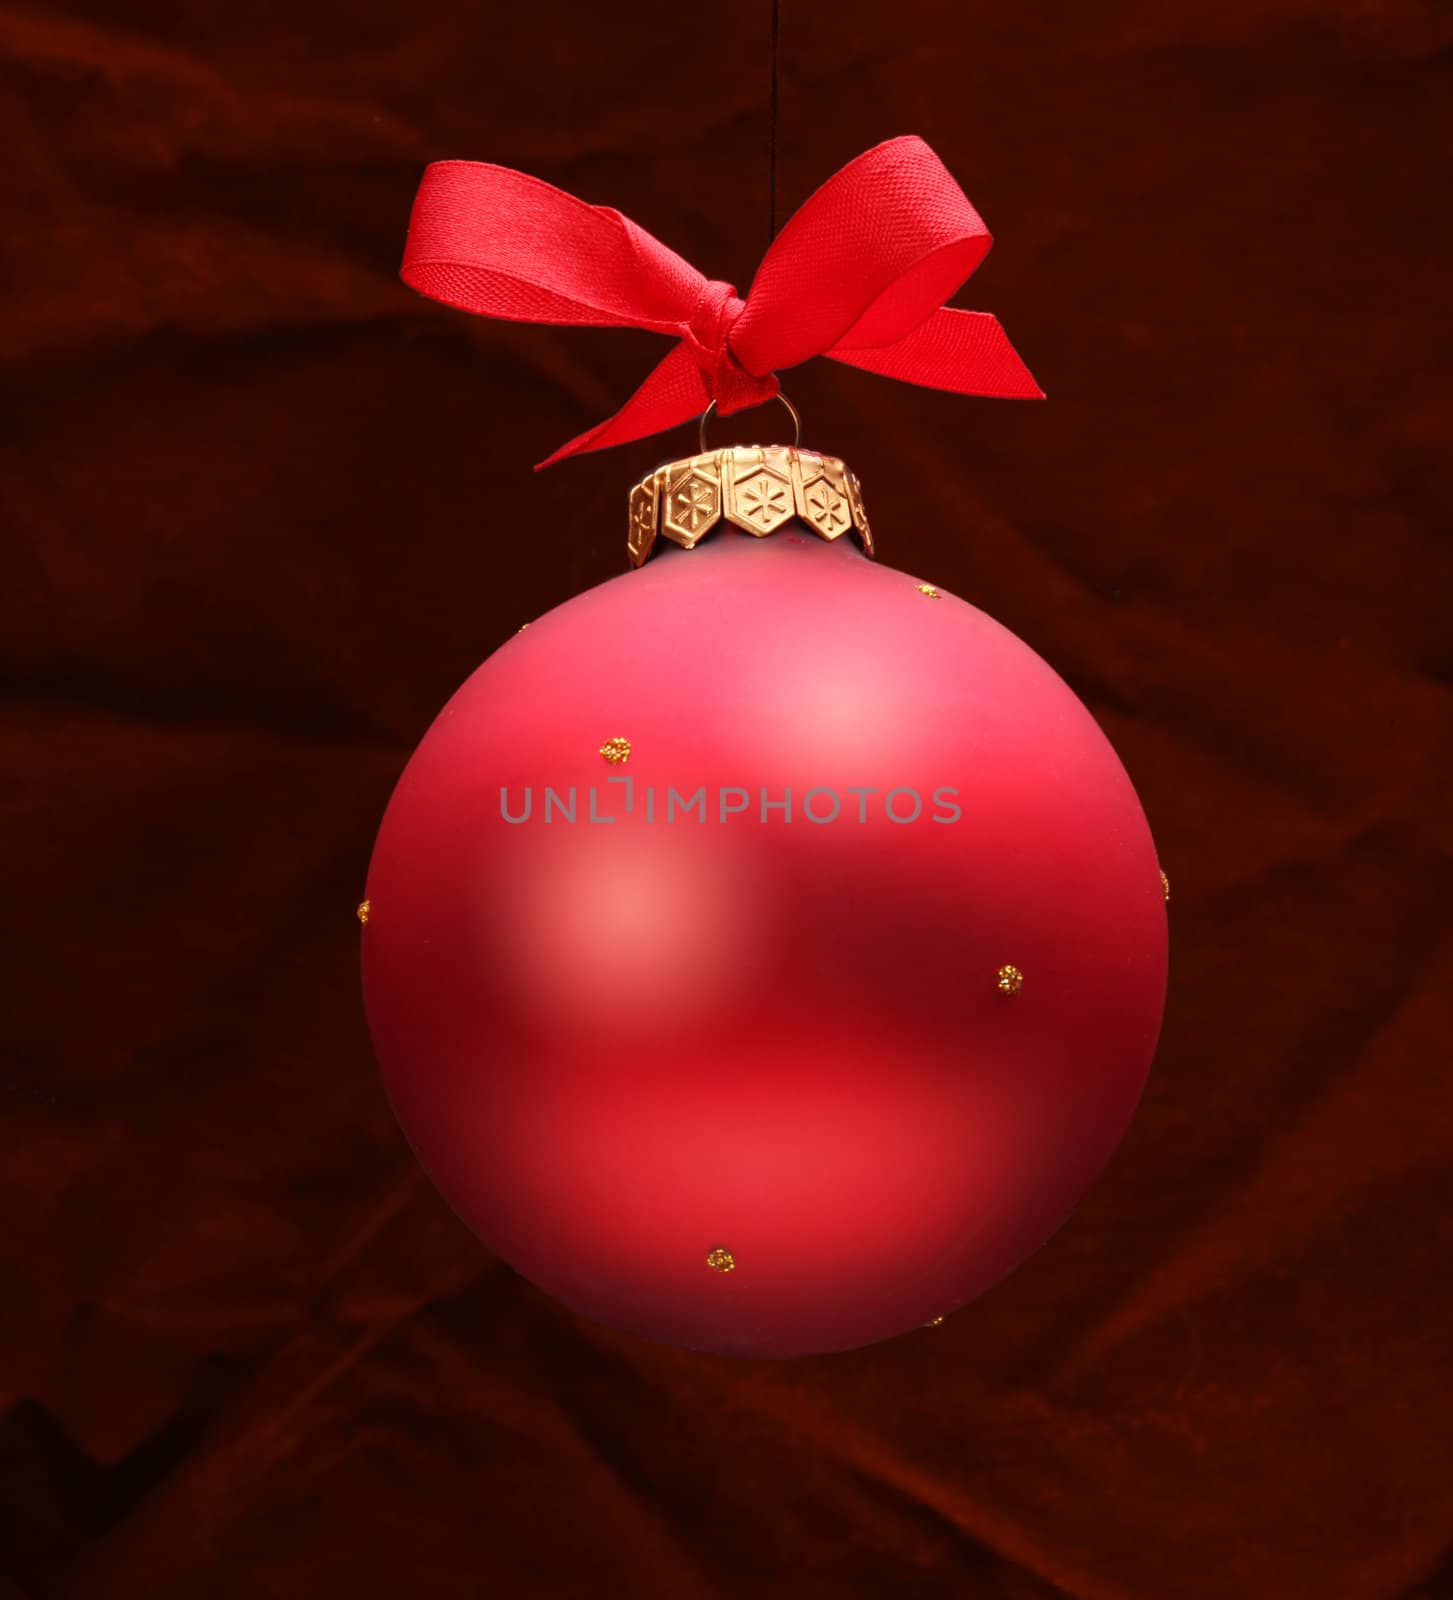 Red Christmas ball by rudchenko